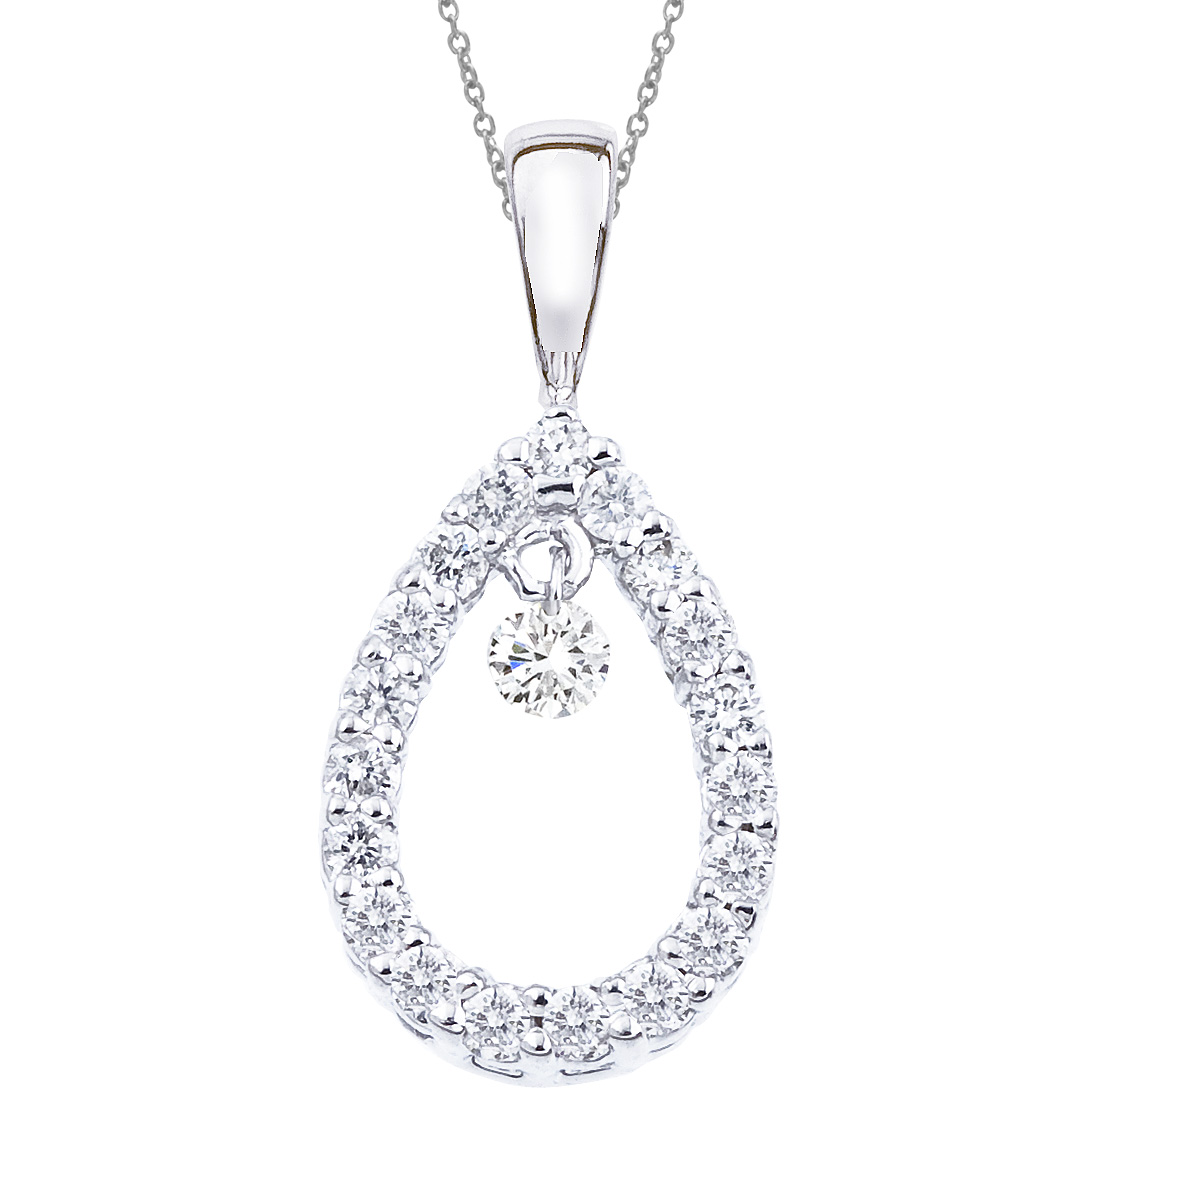 14k gold Dashinng Diamonds pendant with 0.25 total ct diamonds. The center dangling diamond dance...